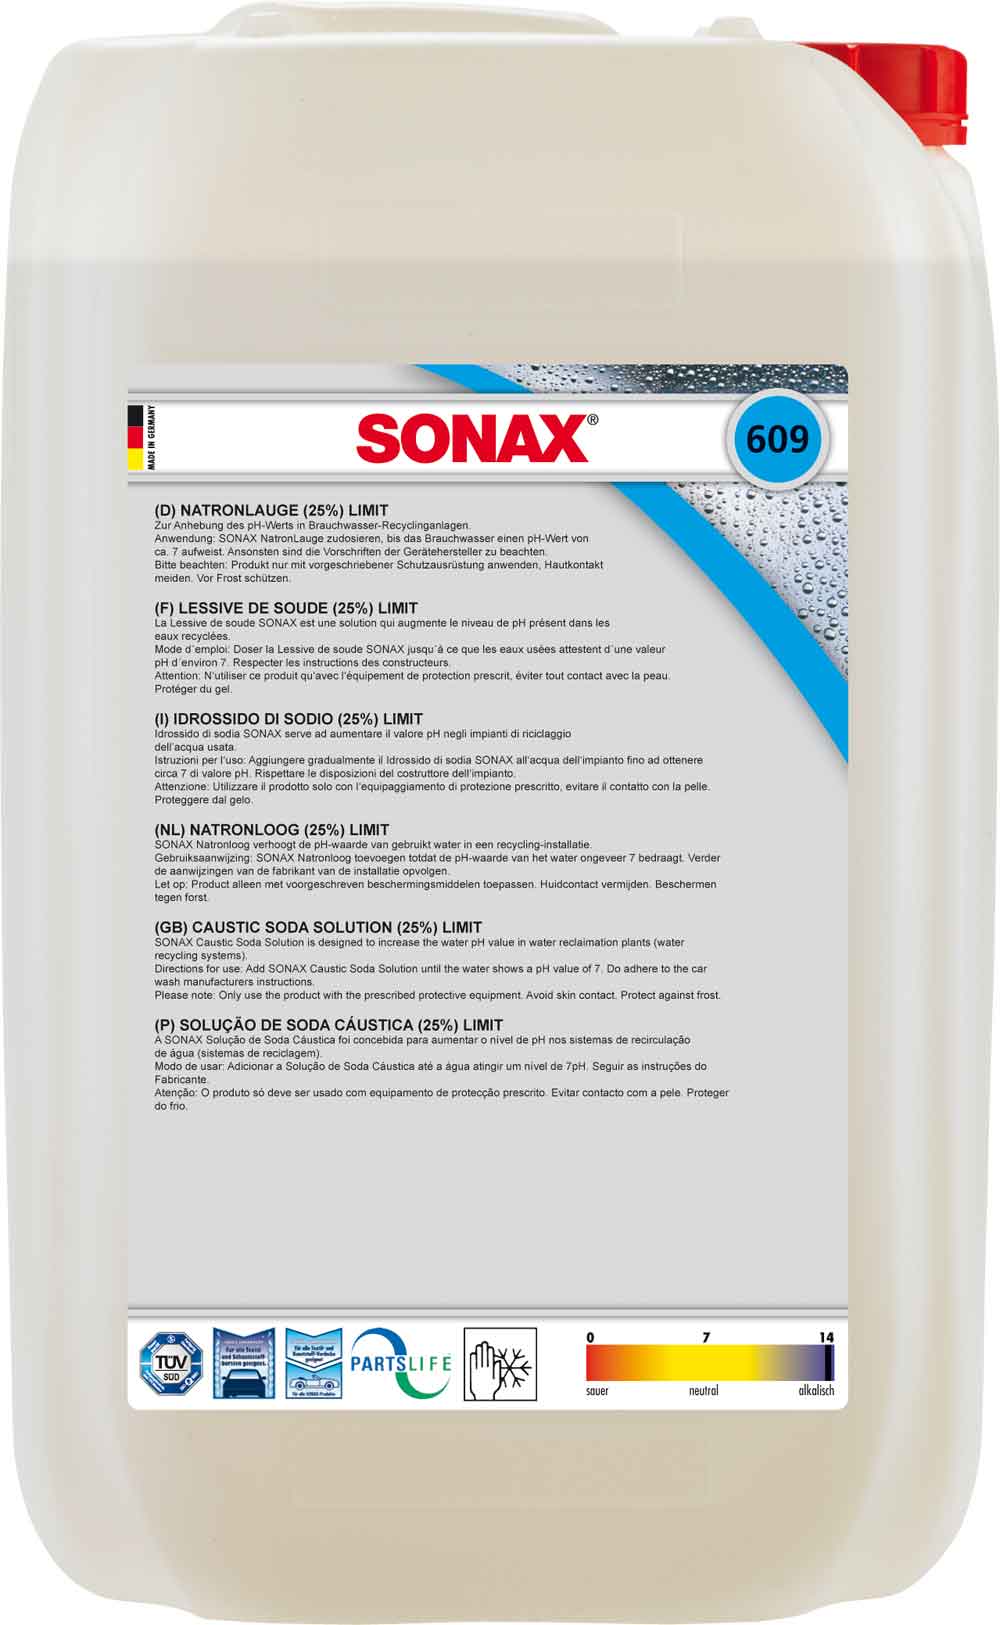 SONAX NatronLauge/Caustic Soda Solution 25% PH-Wert Neutralisator 25L